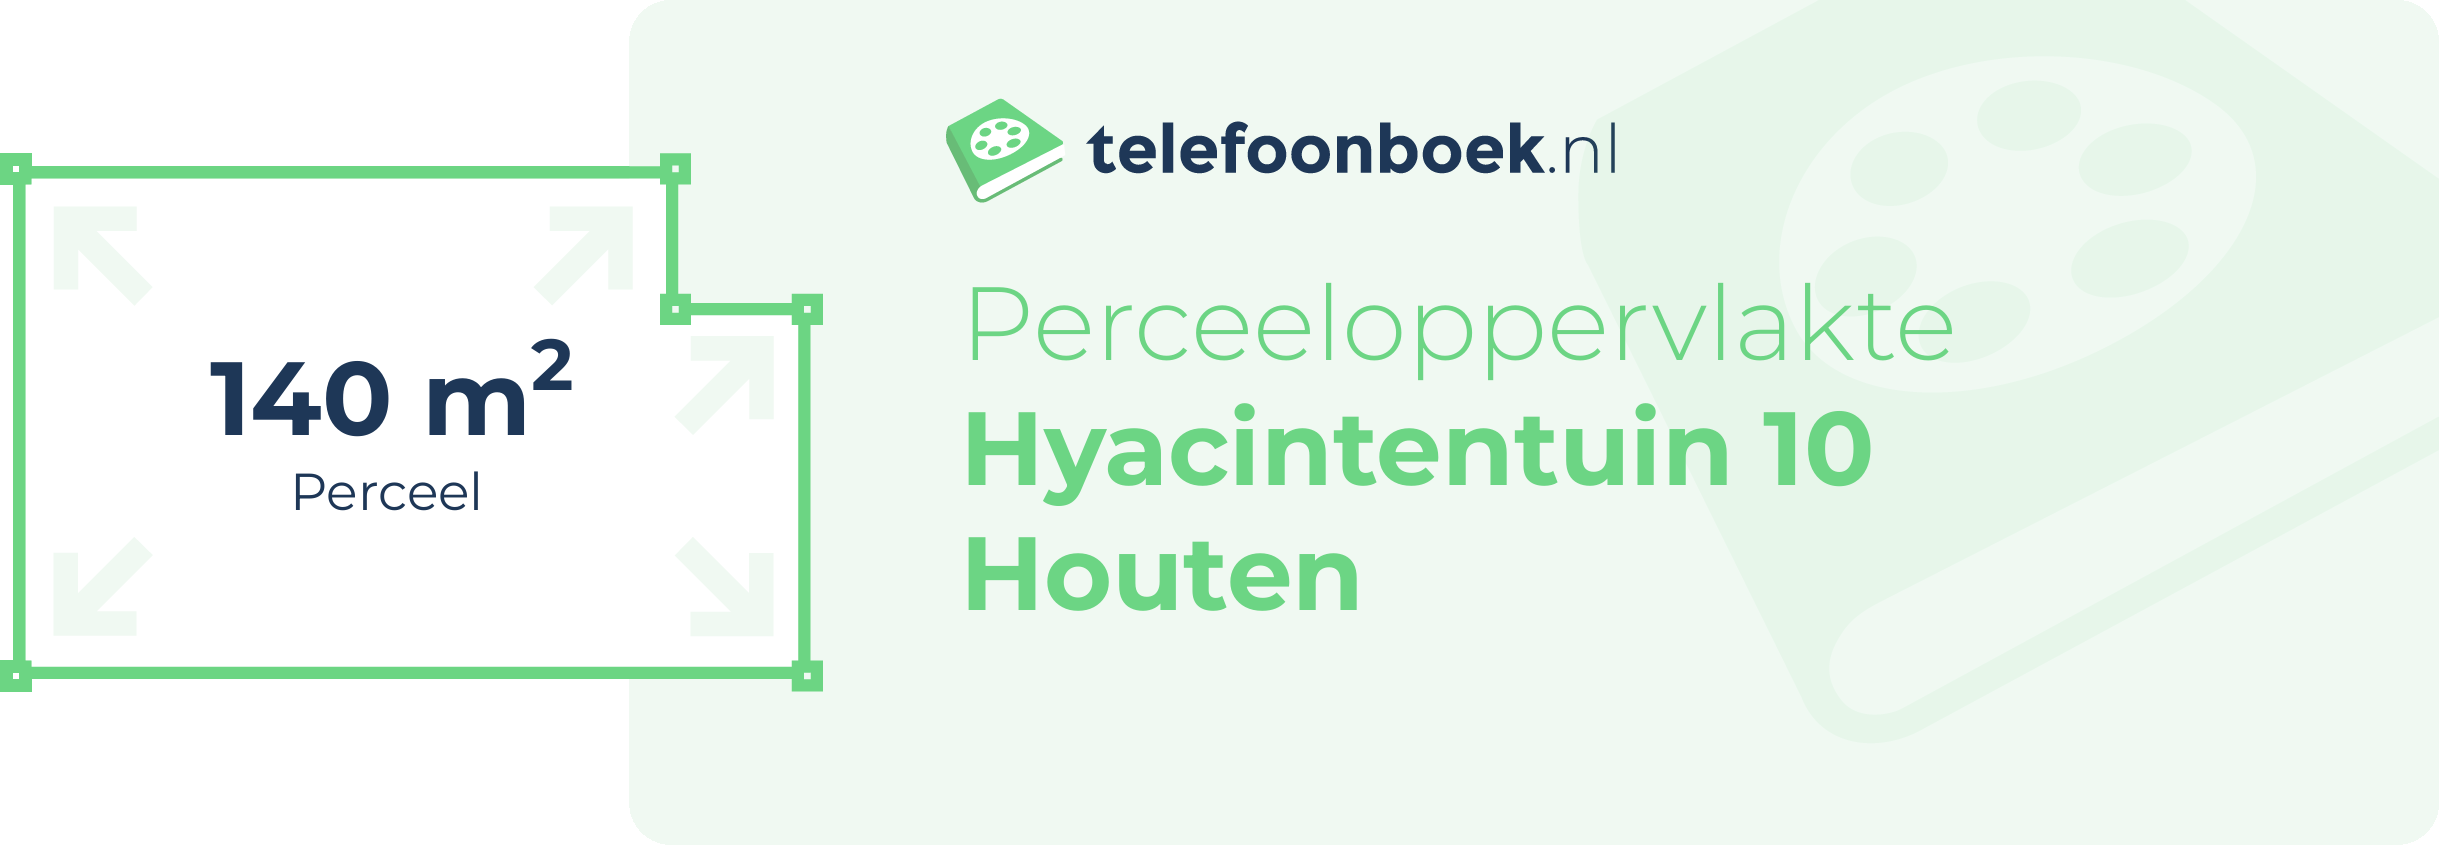 Perceeloppervlakte Hyacintentuin 10 Houten